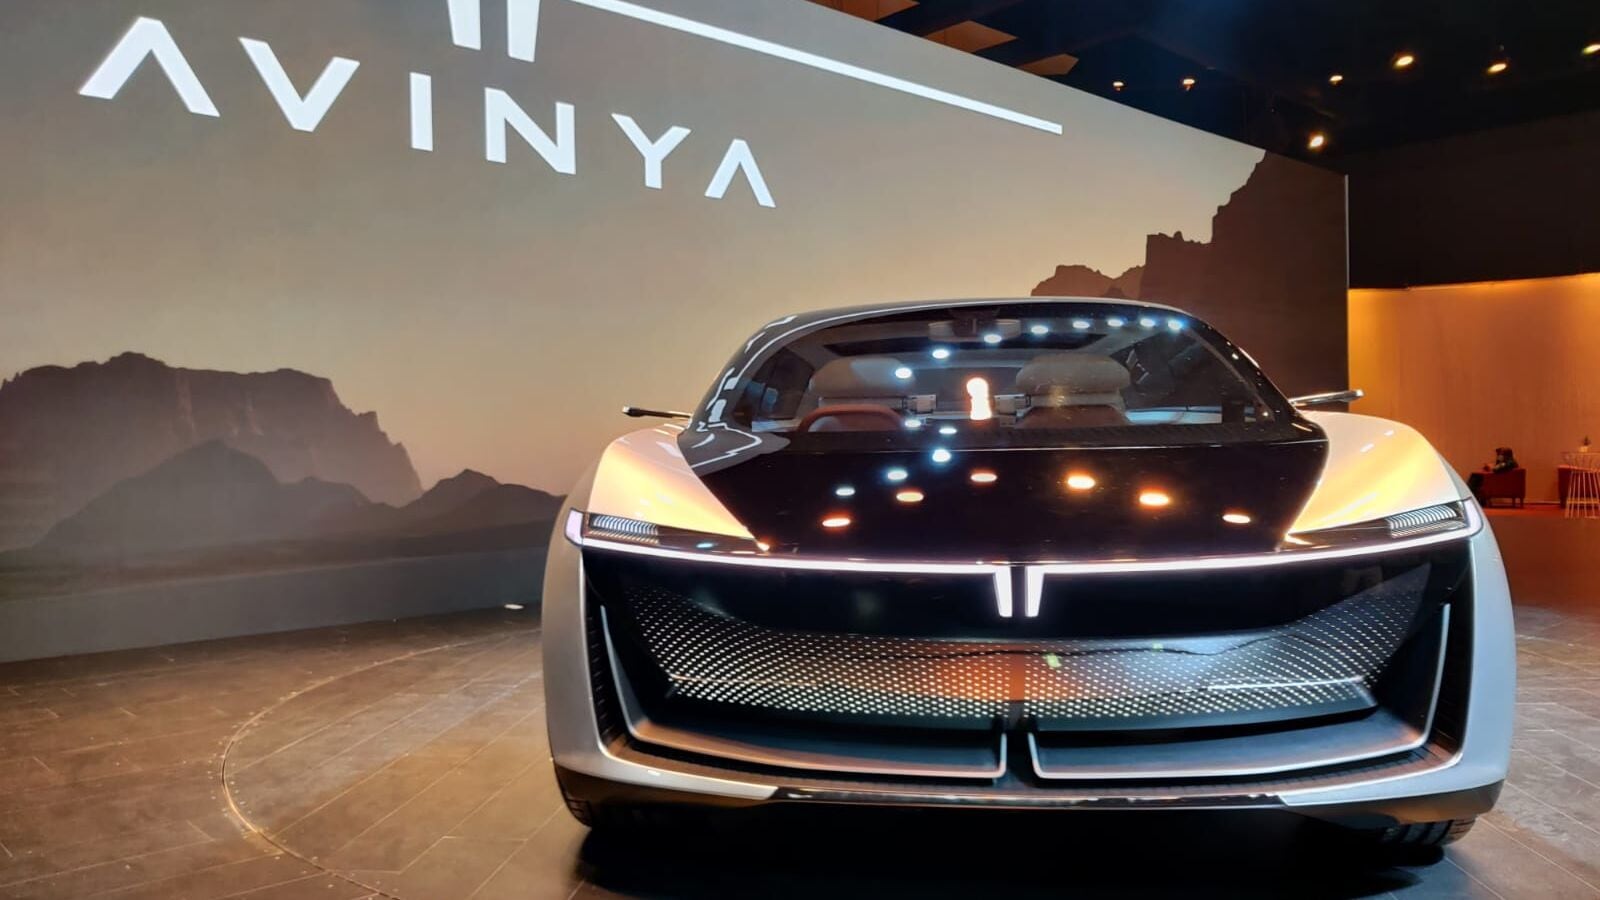 Tata Avinya EV concept, indepth look Tata Motors charging the future